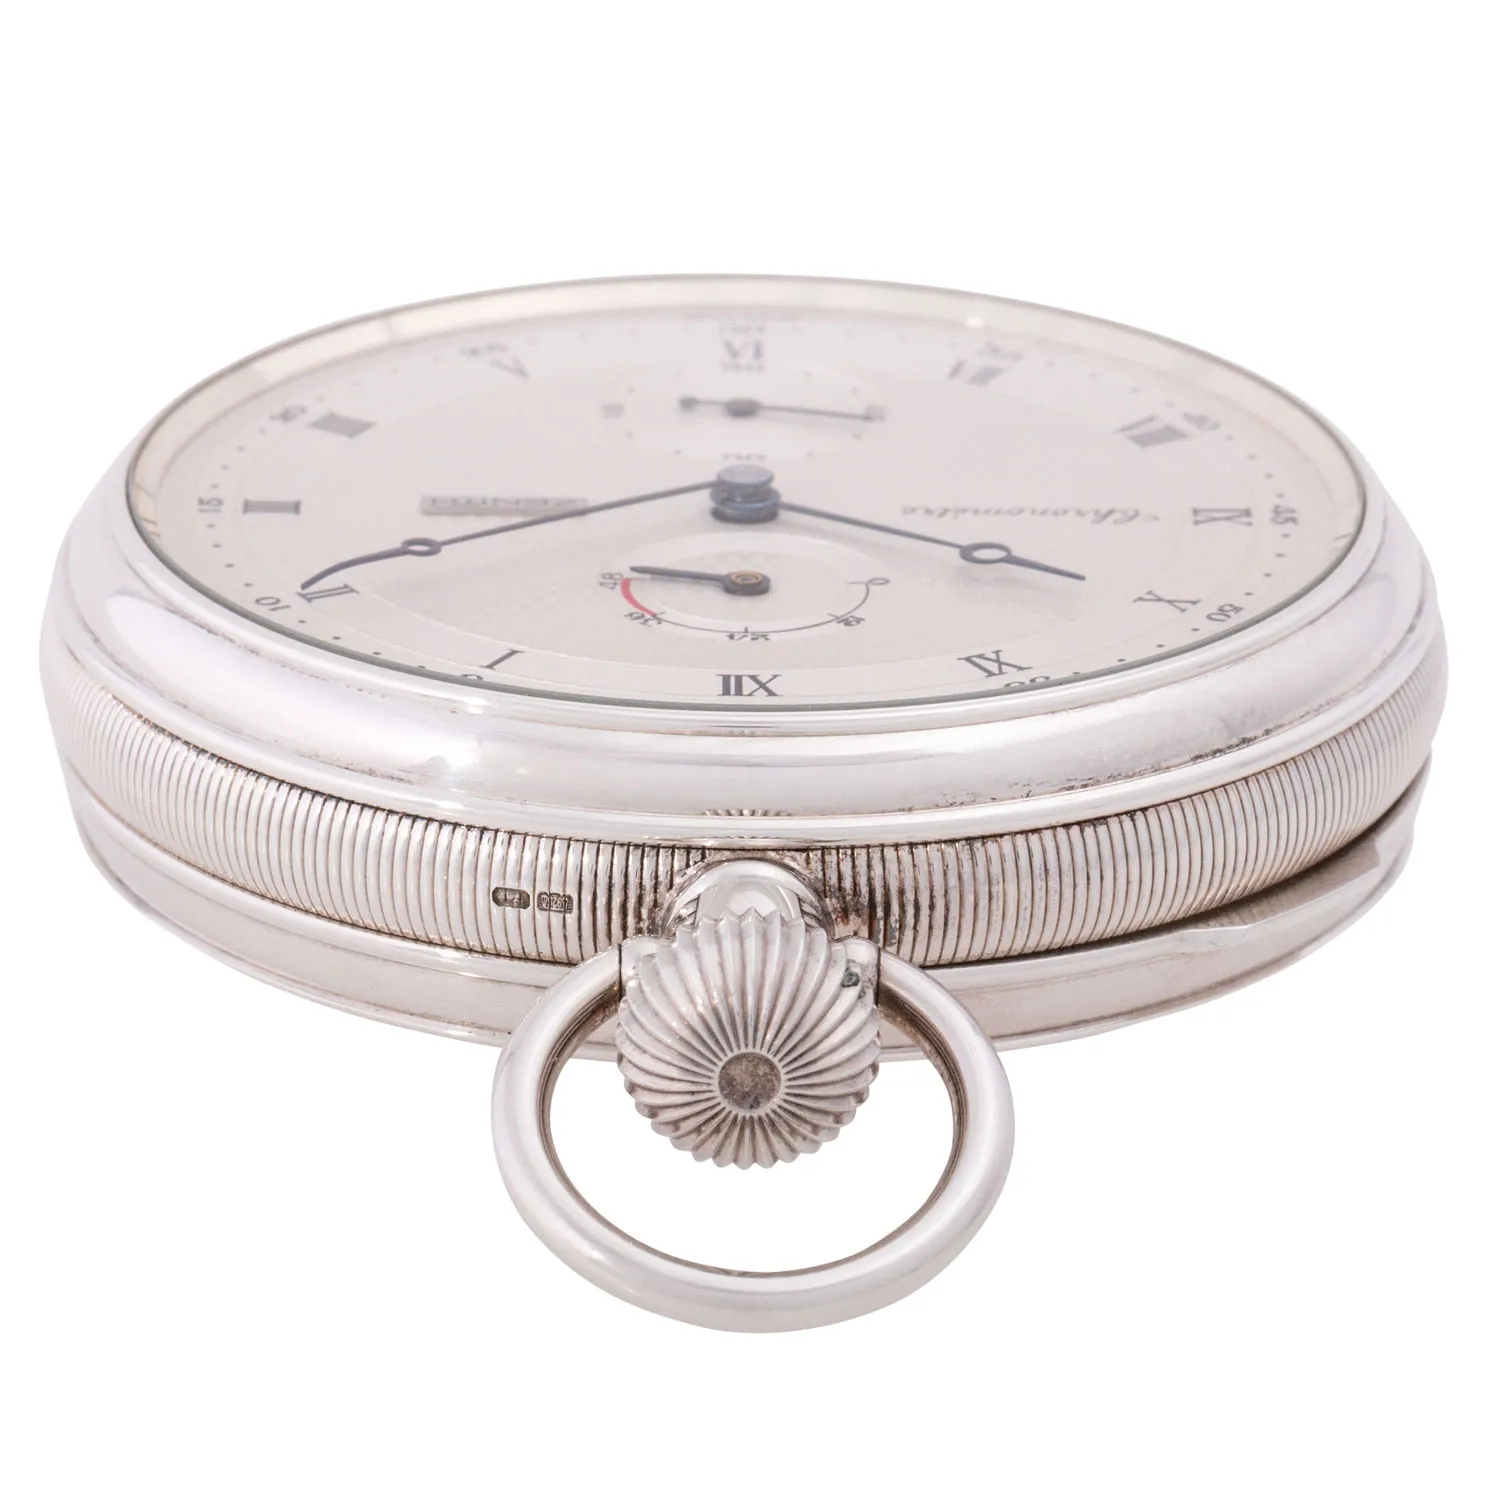 Zenith Deck Chronometer 07.0050.141 E 60mm Silver Silver 5